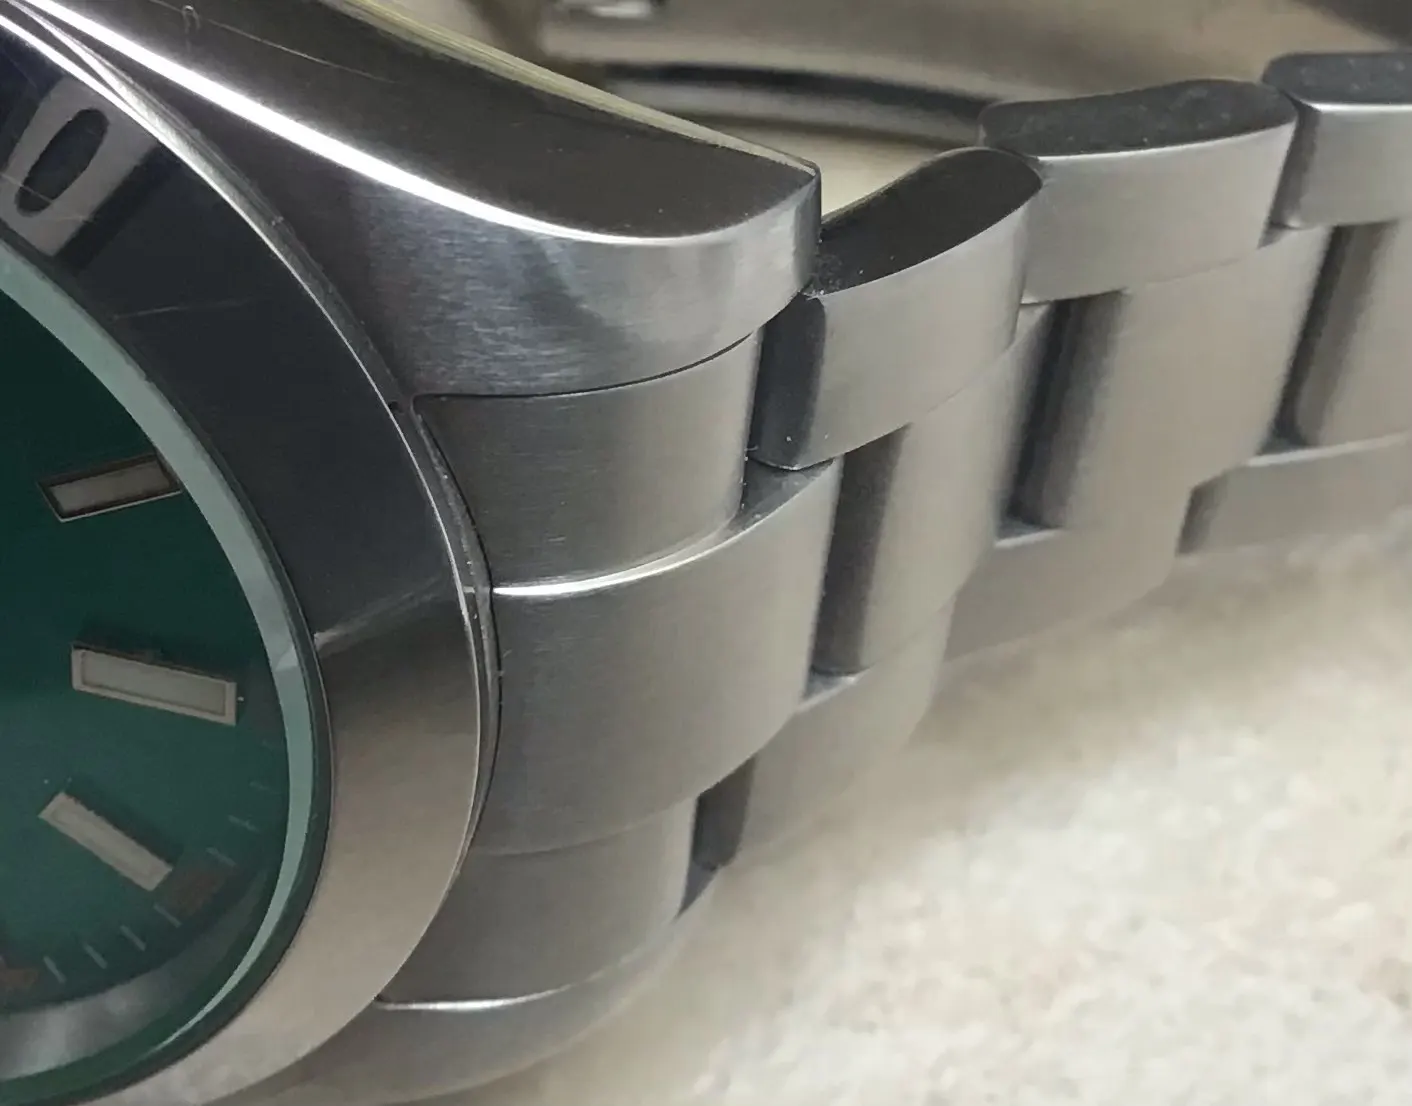 PAGANI DESIGN Green Glass Men's Mechanical Watches photo review